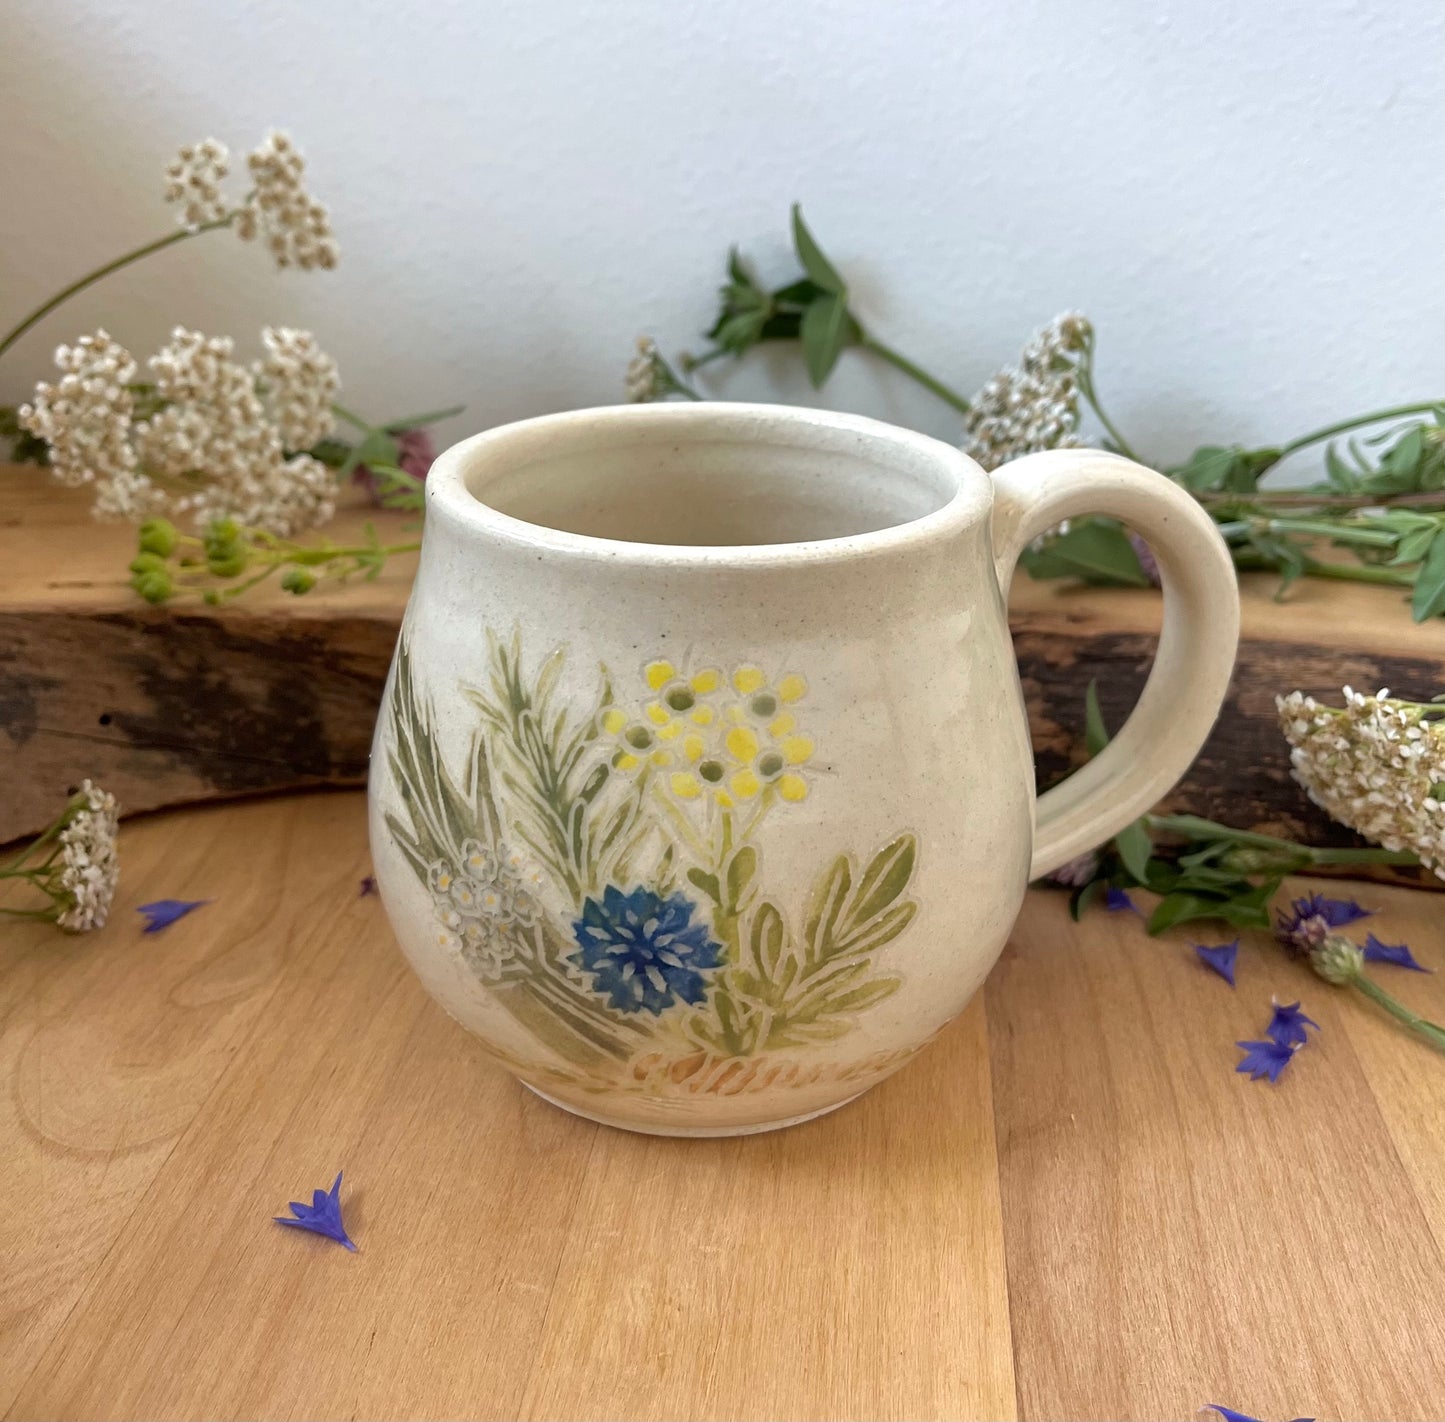 Protection Spell Mug - Handmade Ceramic Mug